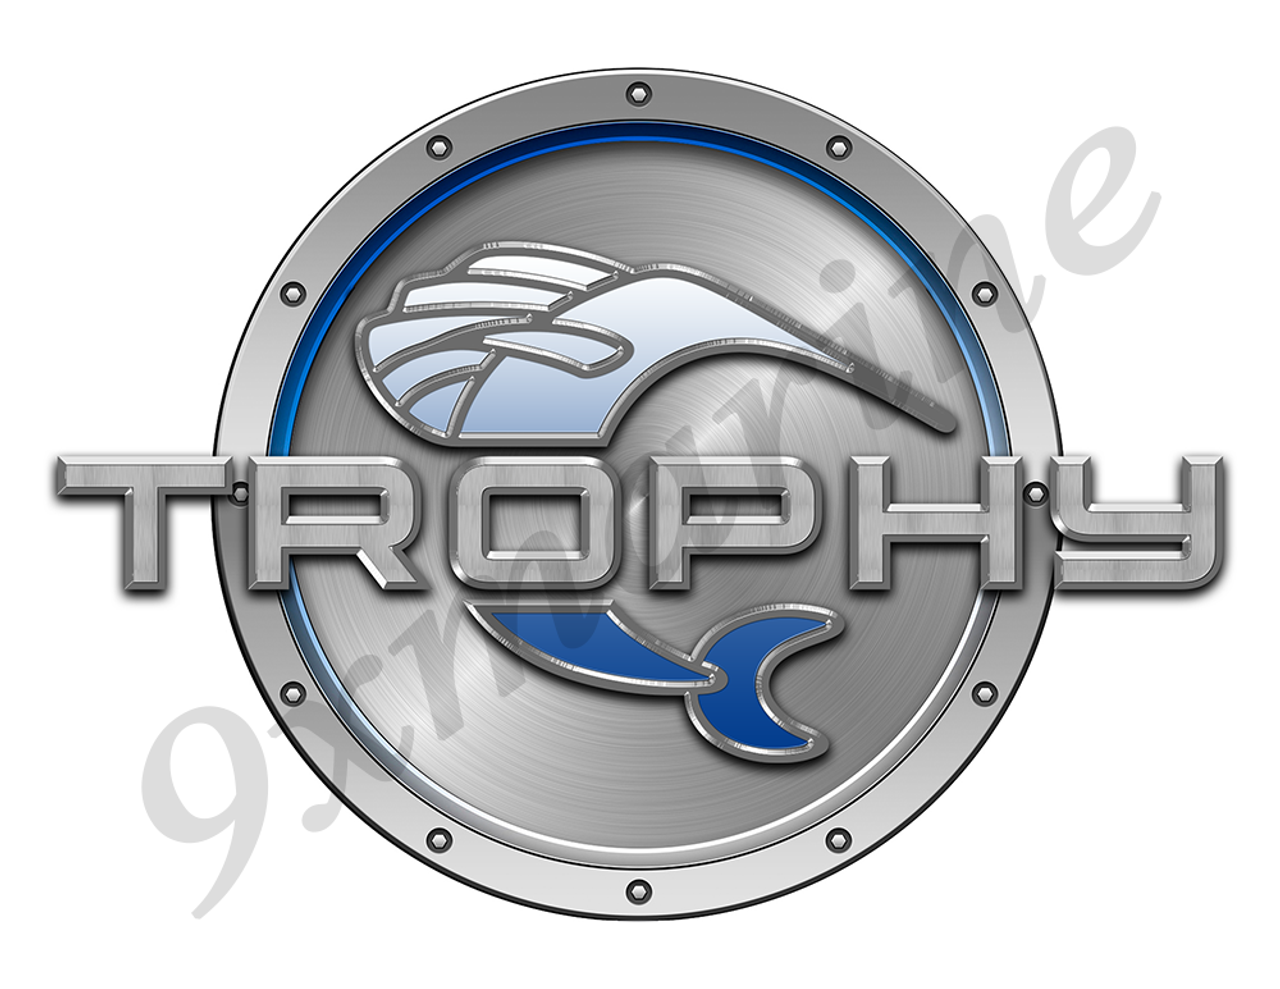 Trophy Remastered Sticker. Brushed Metal Style - 7.5" diameter